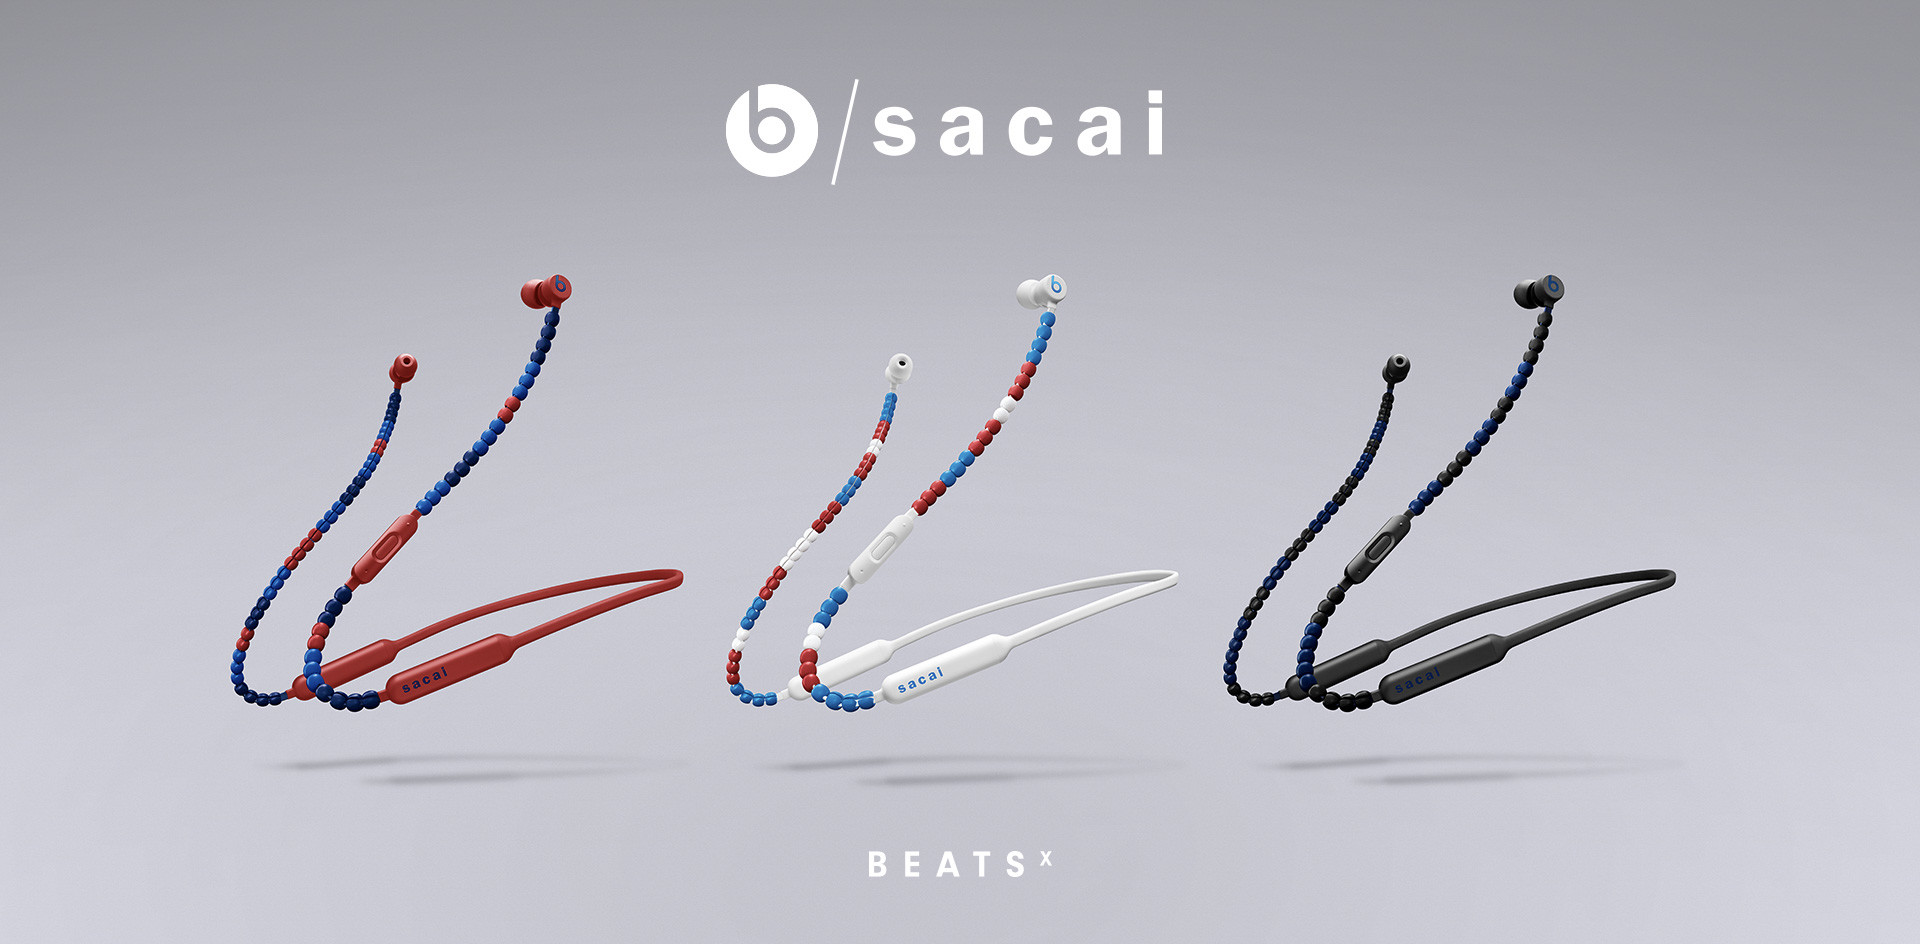 sacai beats BeatsX サカイ ビーツ ディープブラック | nate-hospital.com